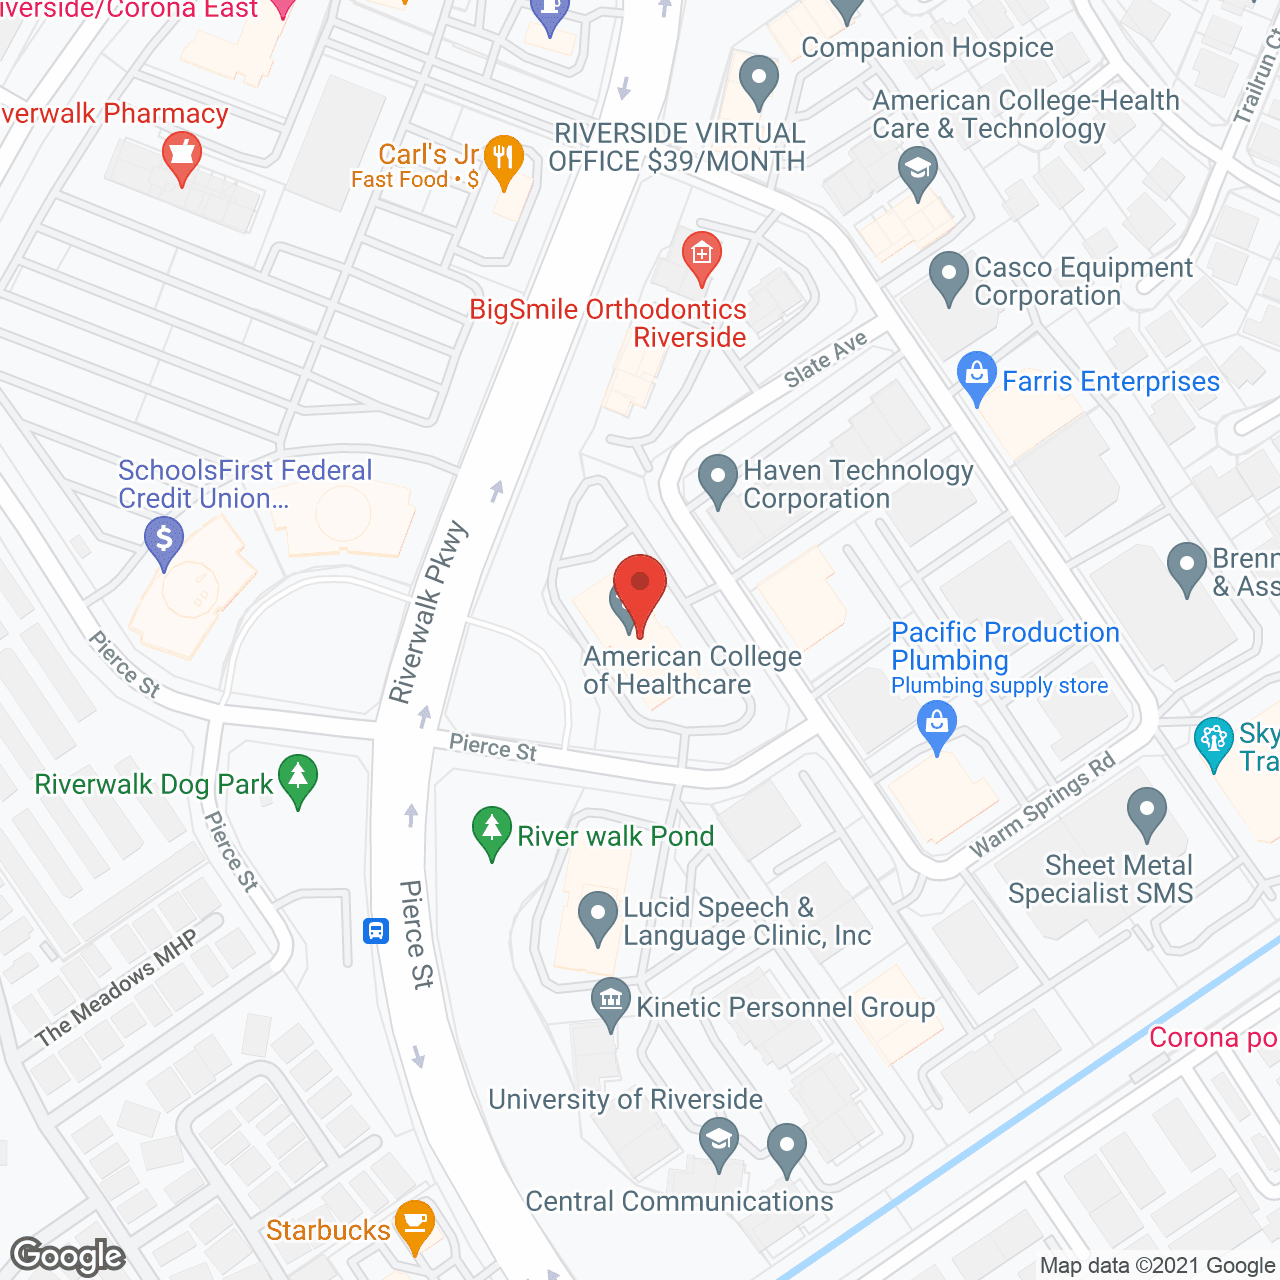 TheKey of Riverside, CA in google map